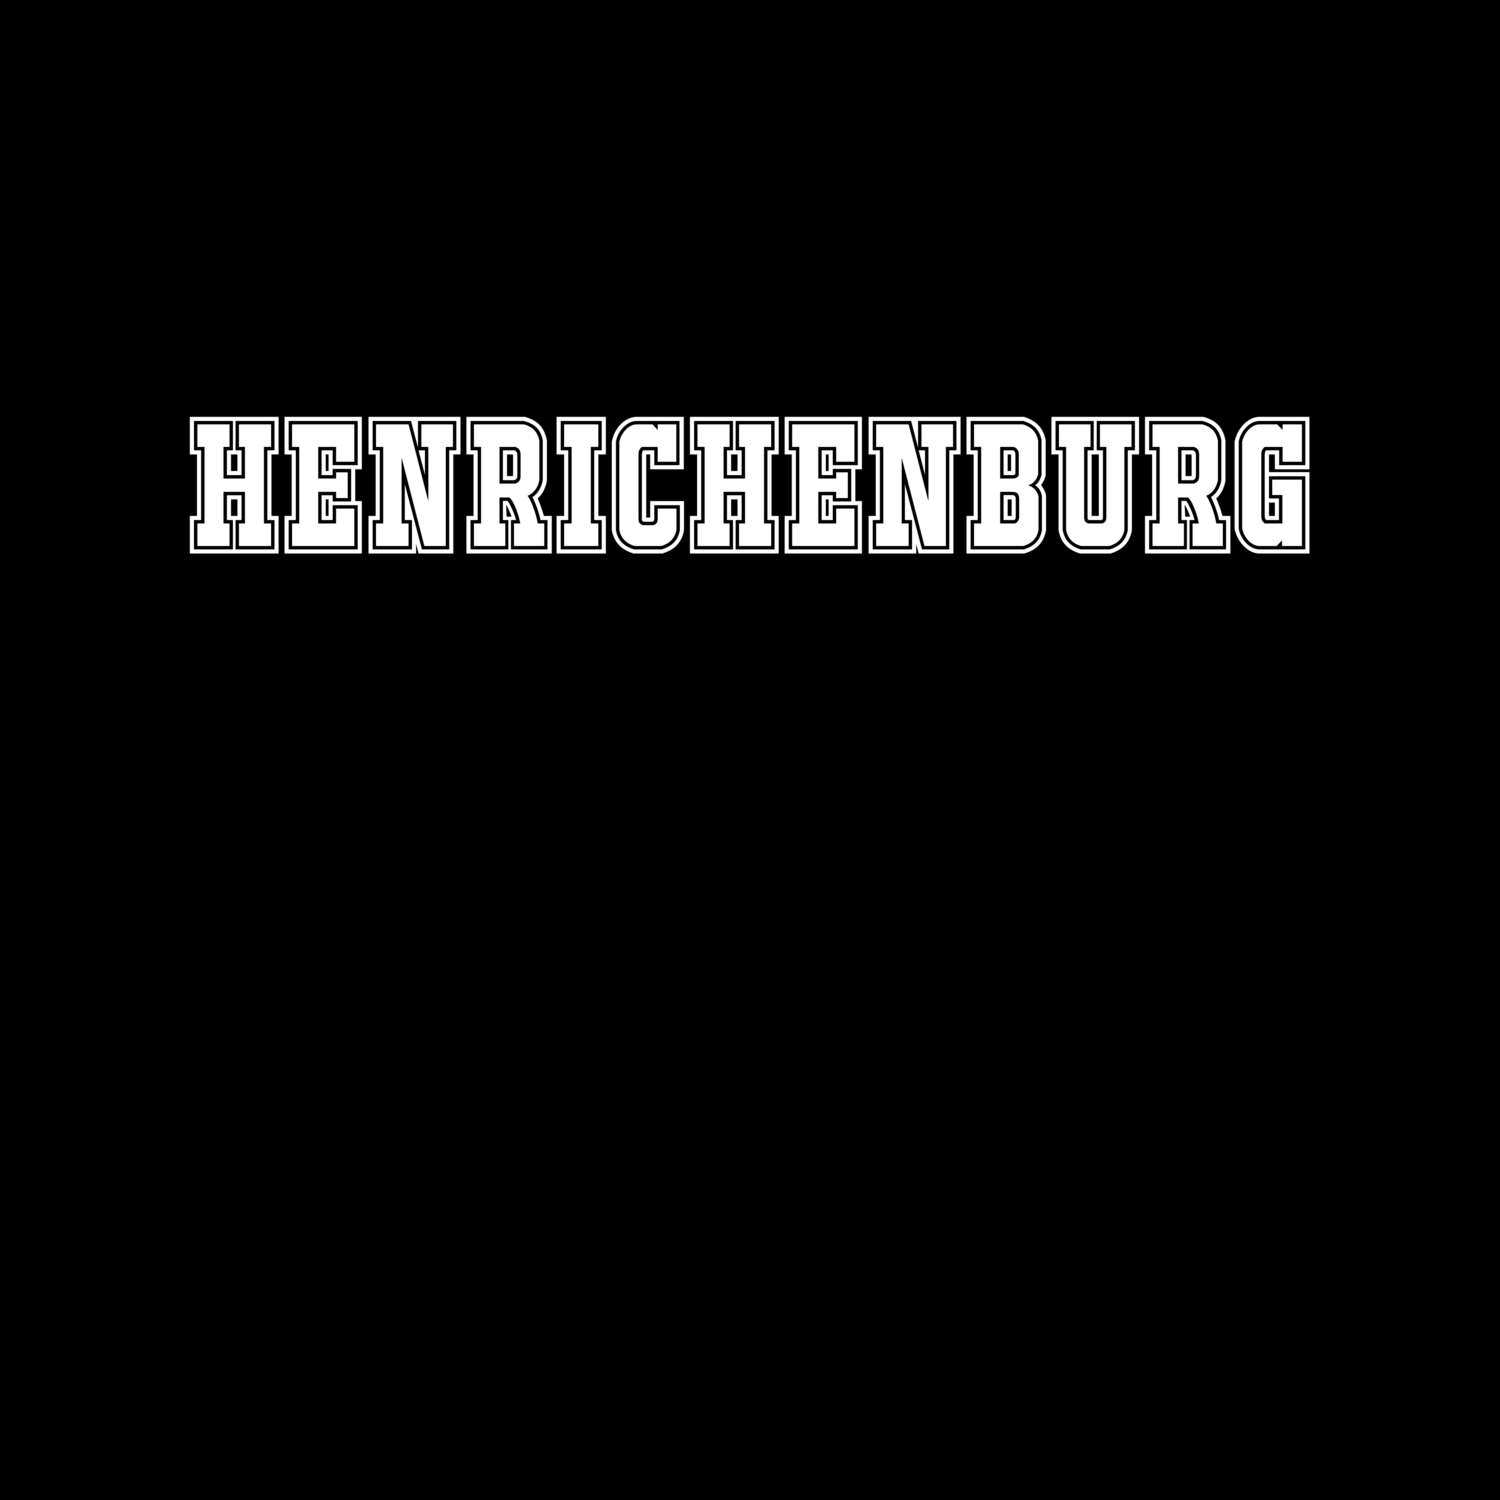 Henrichenburg T-Shirt »Classic«